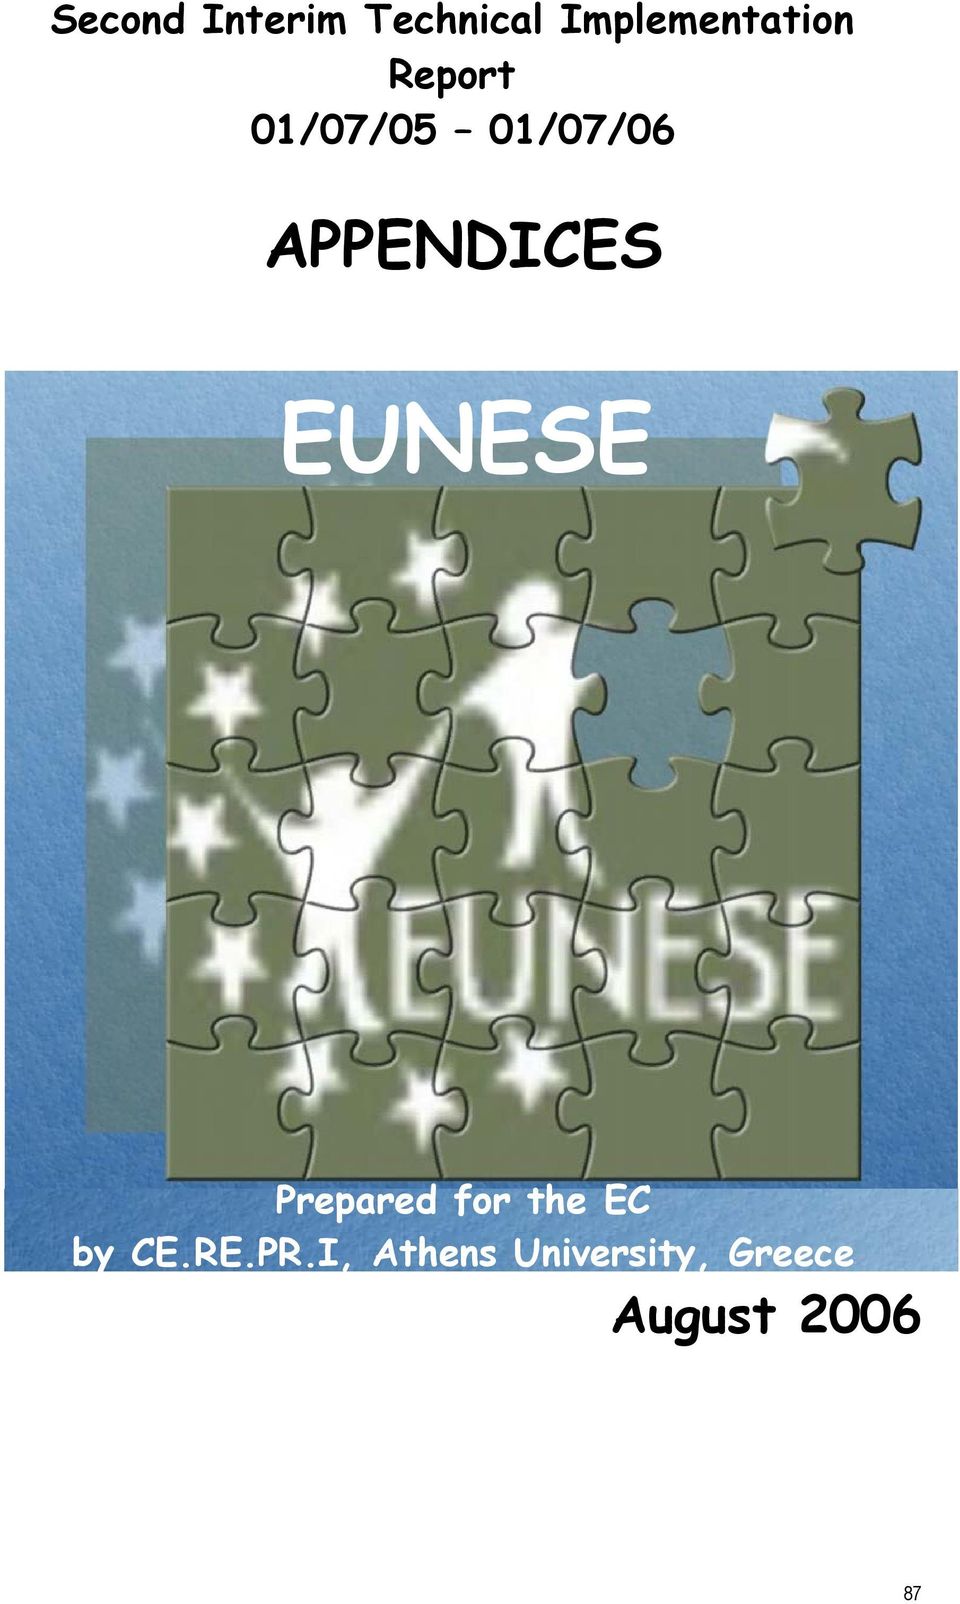 EUNESE Prepared for the EC by CE.RE.PR.